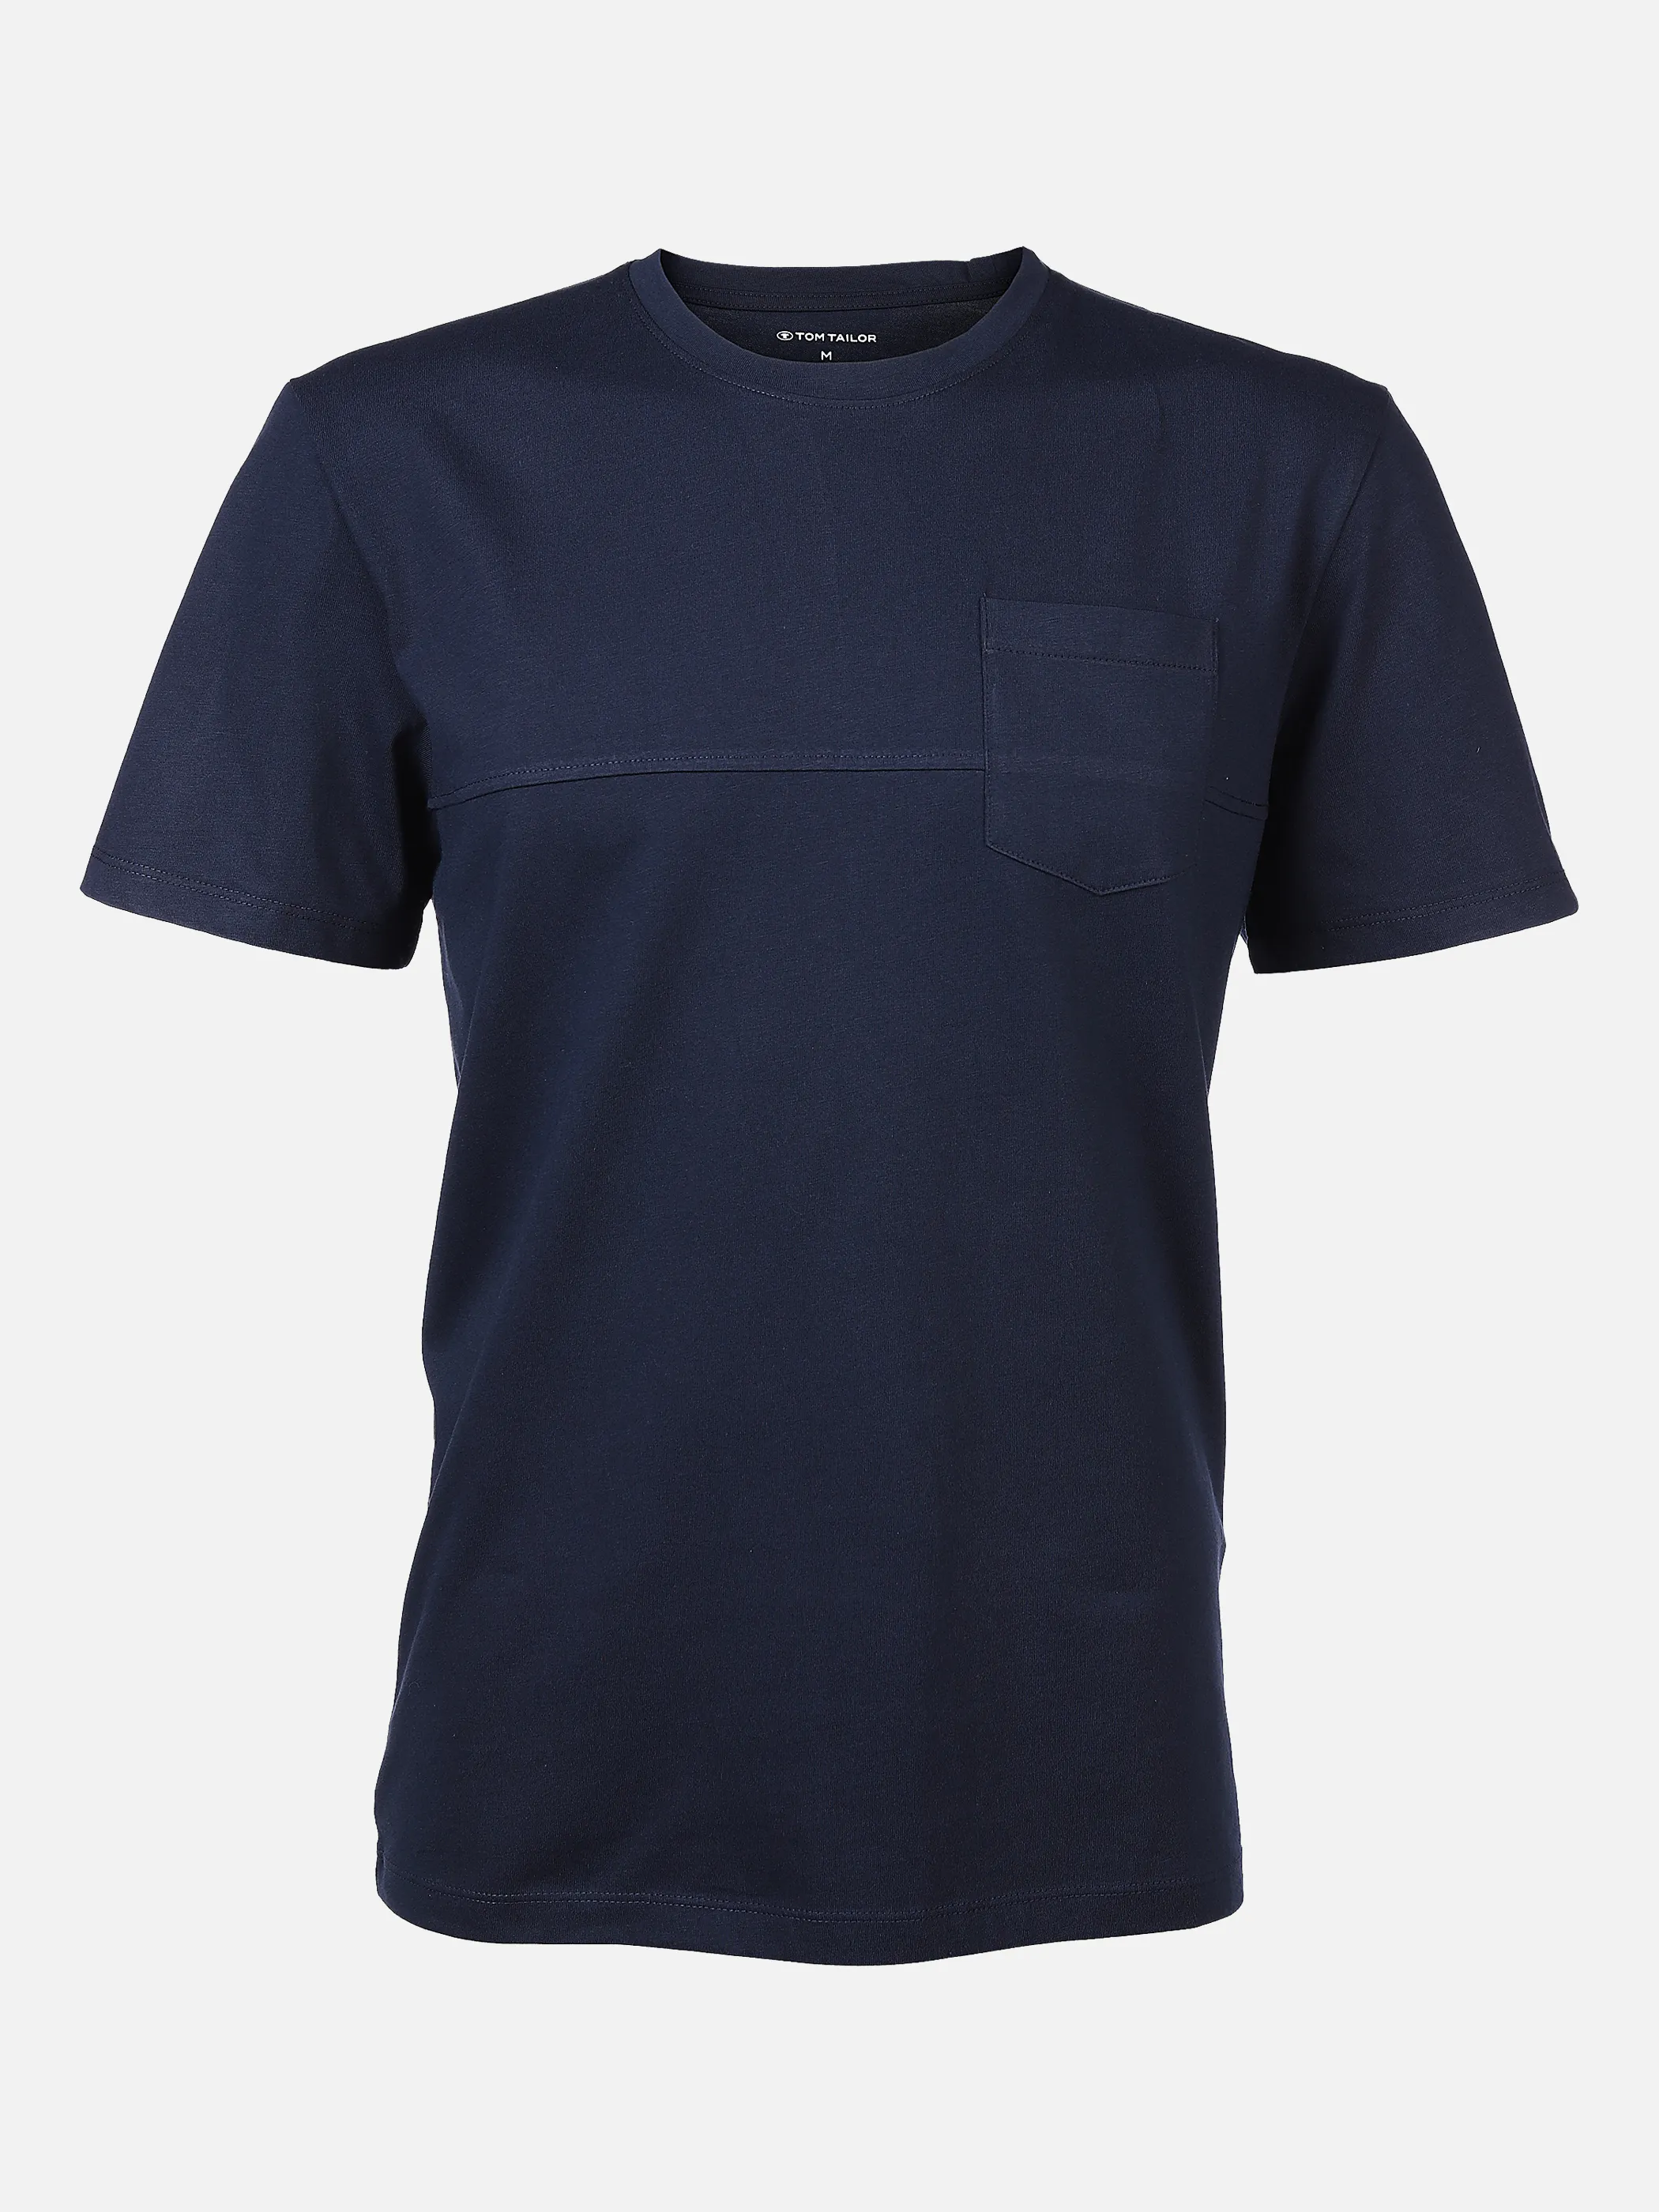 Tom Tailor 1030053 coolmax t-shirt Blau 862563 10668 1